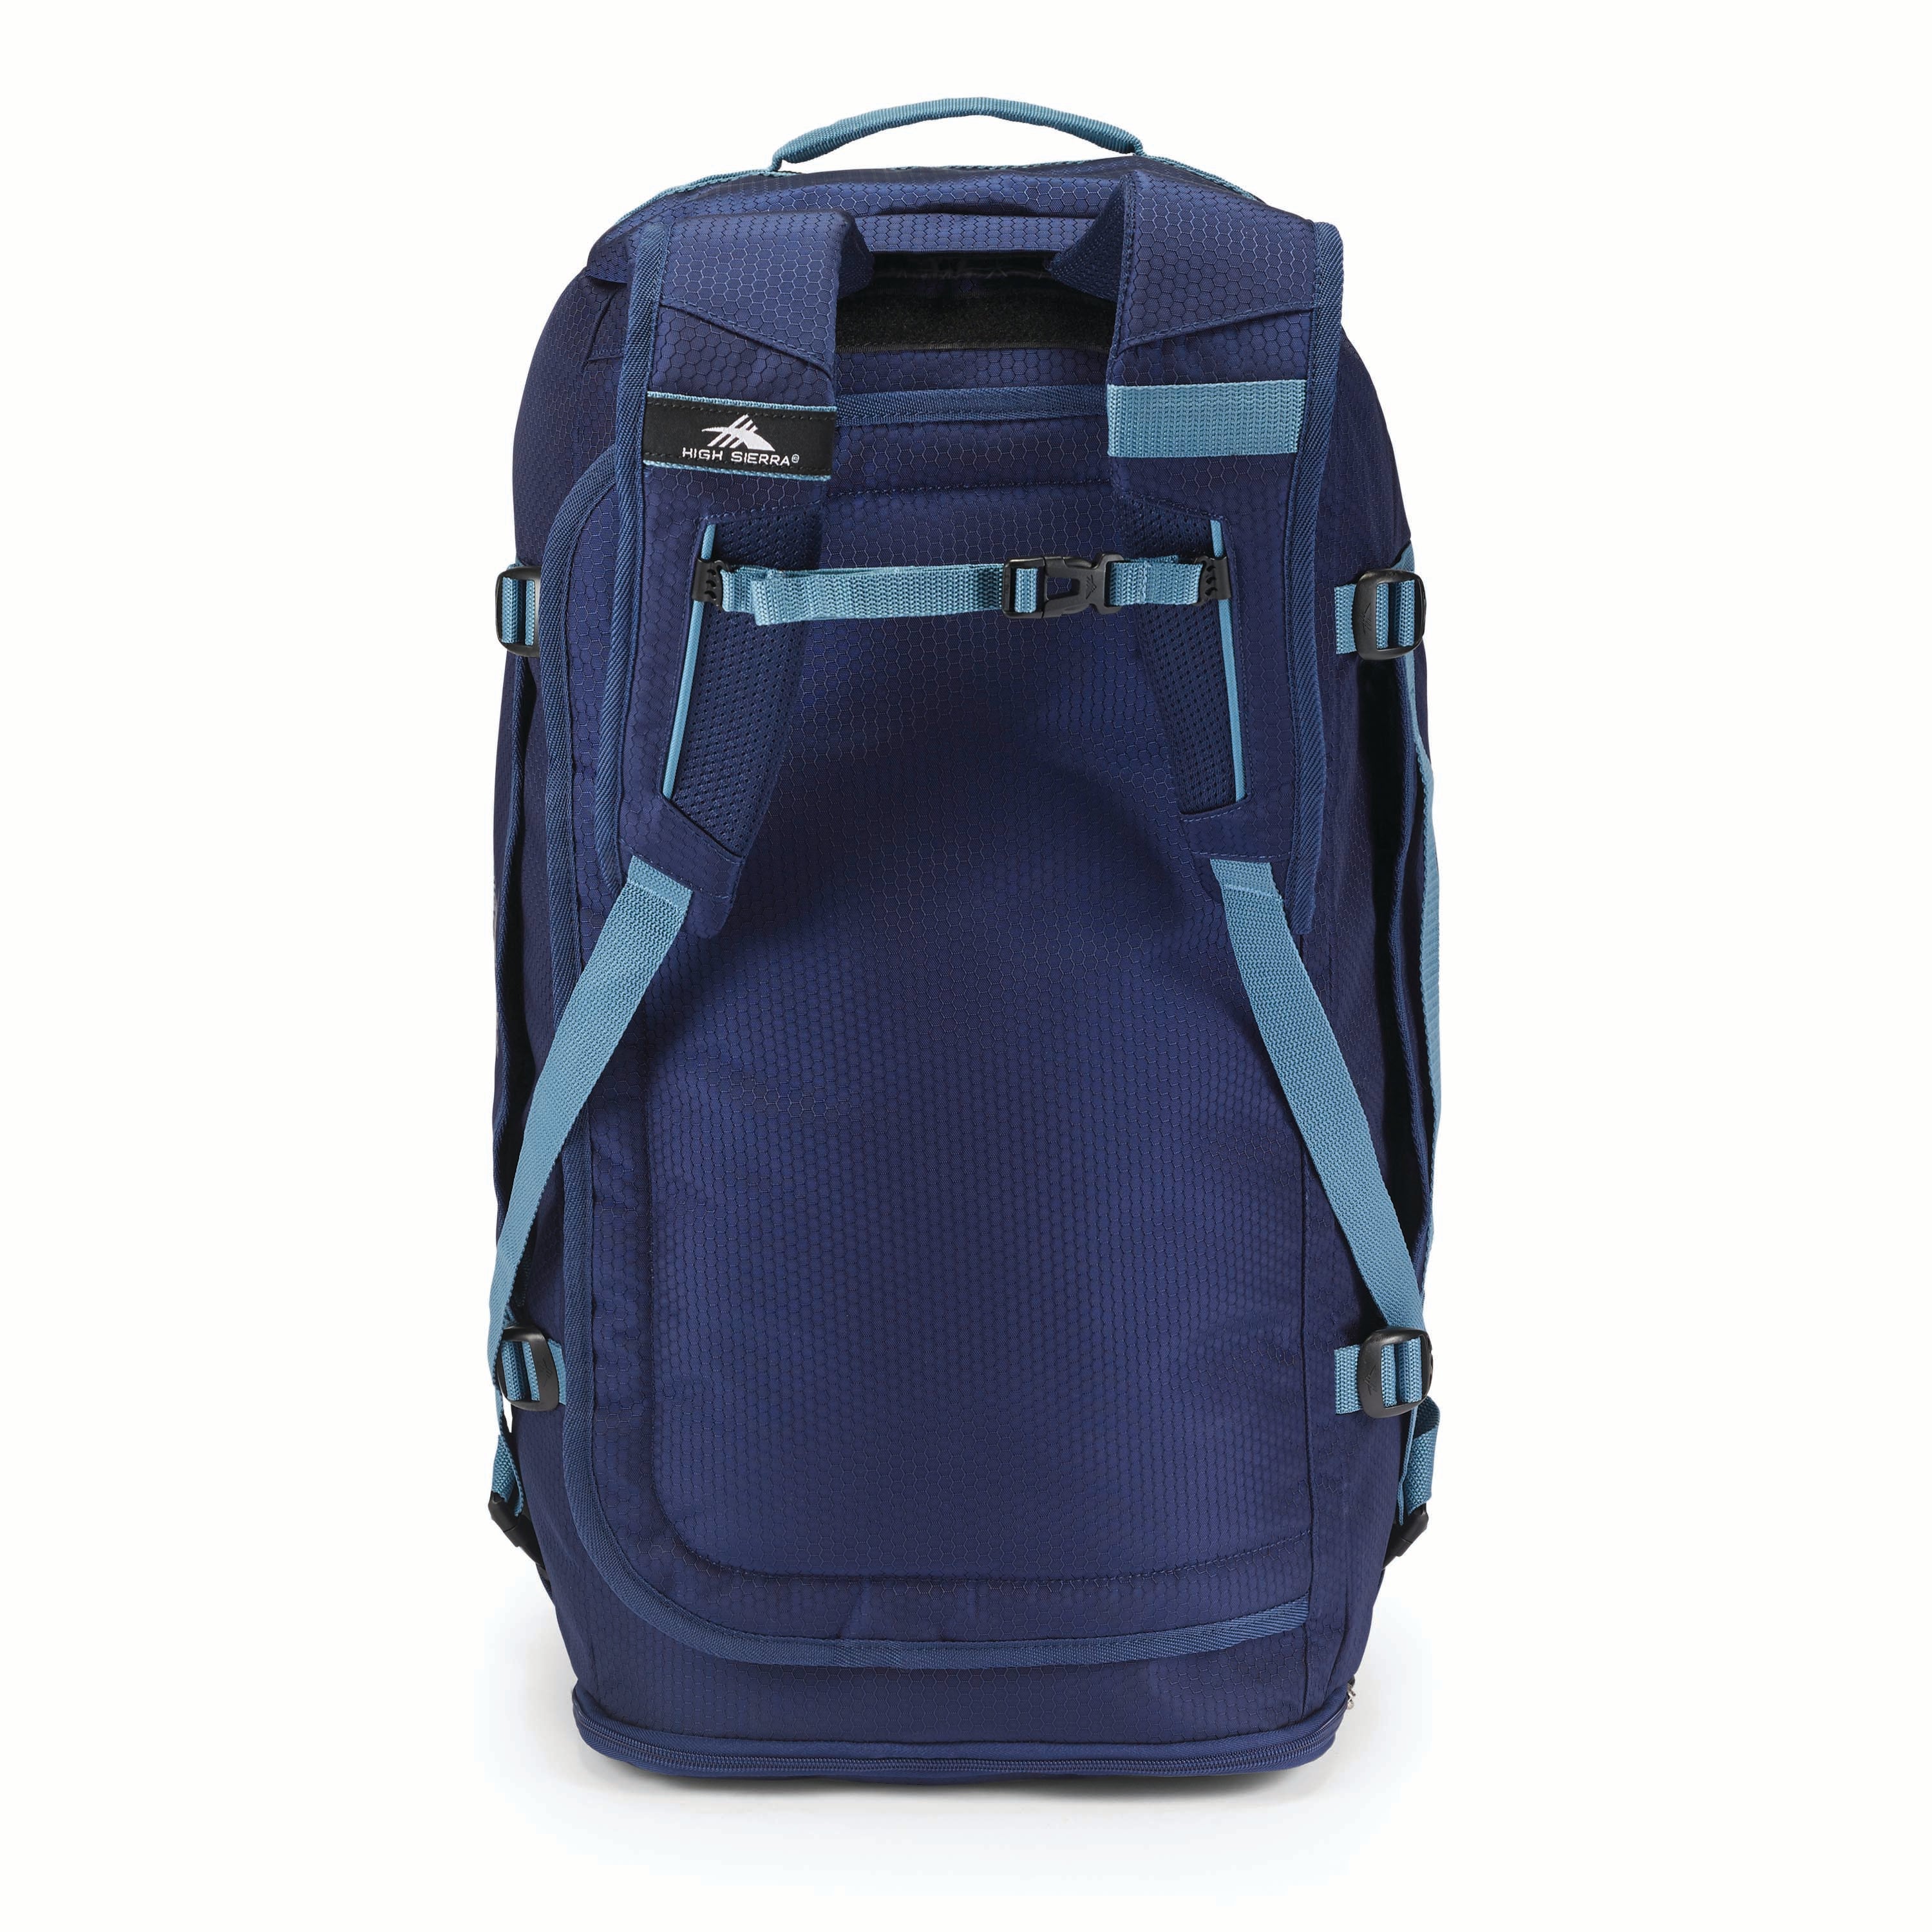 High Sierra - Convertable Backpack-Duffle - Navy-Graphite Blue-4